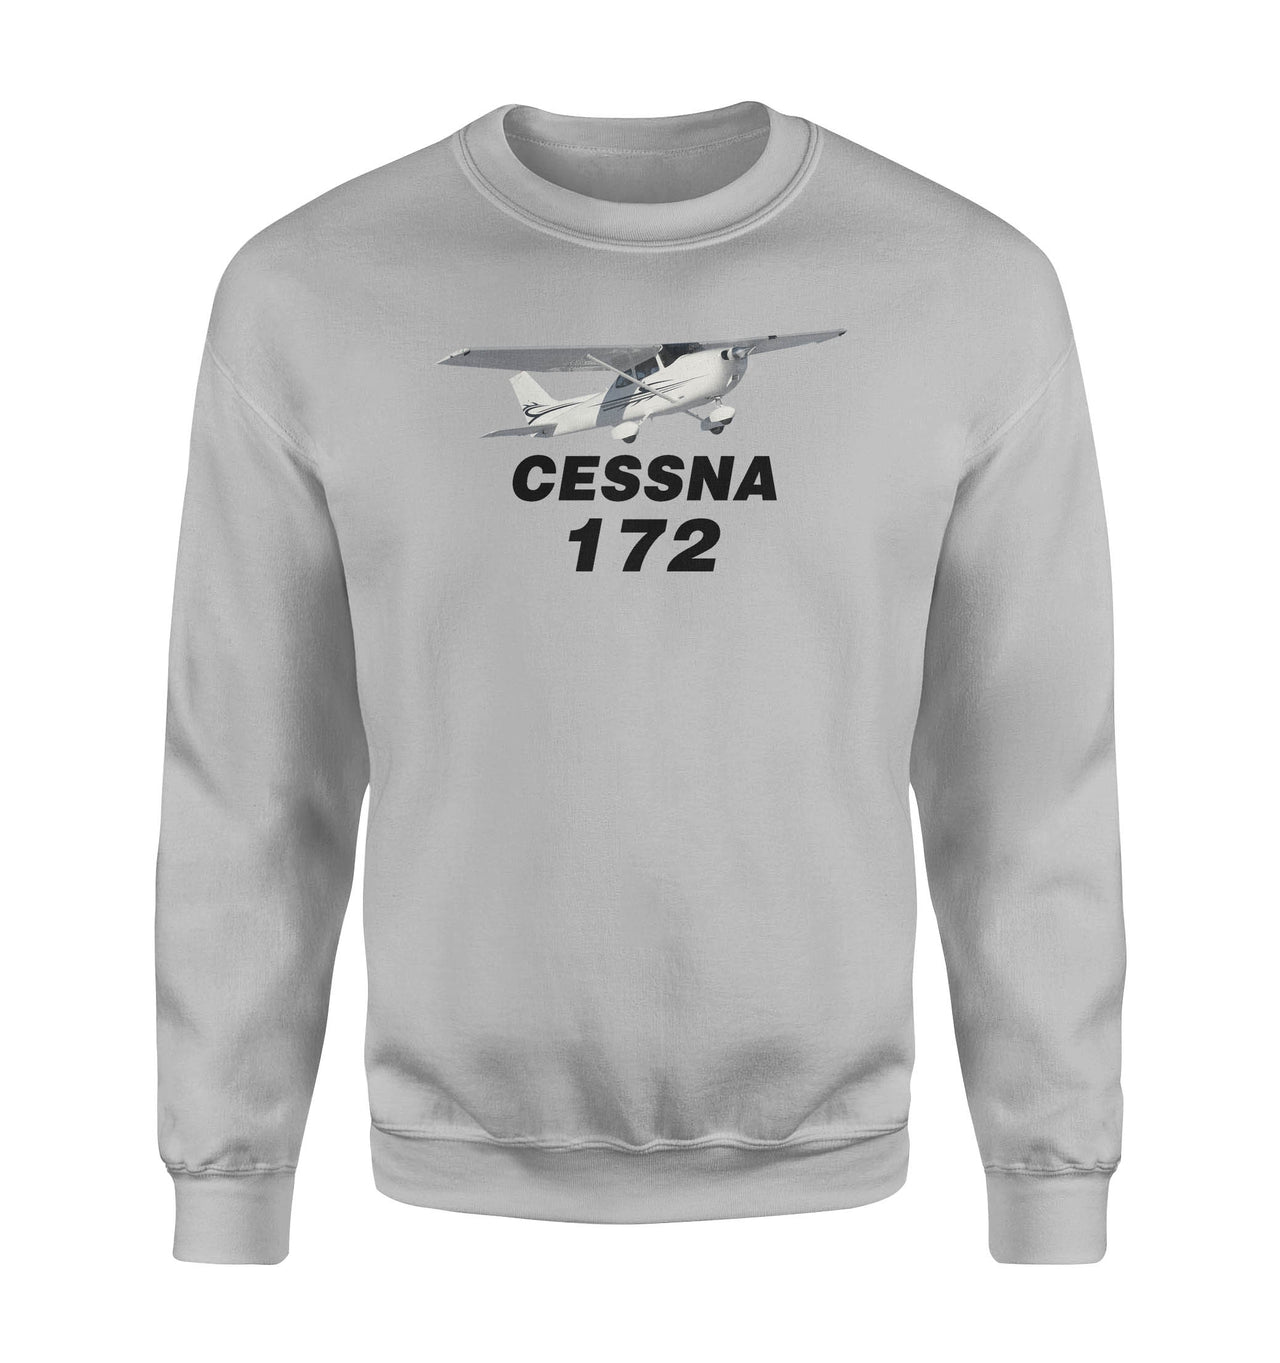 The Cessna 172 Designed Sweatshirts